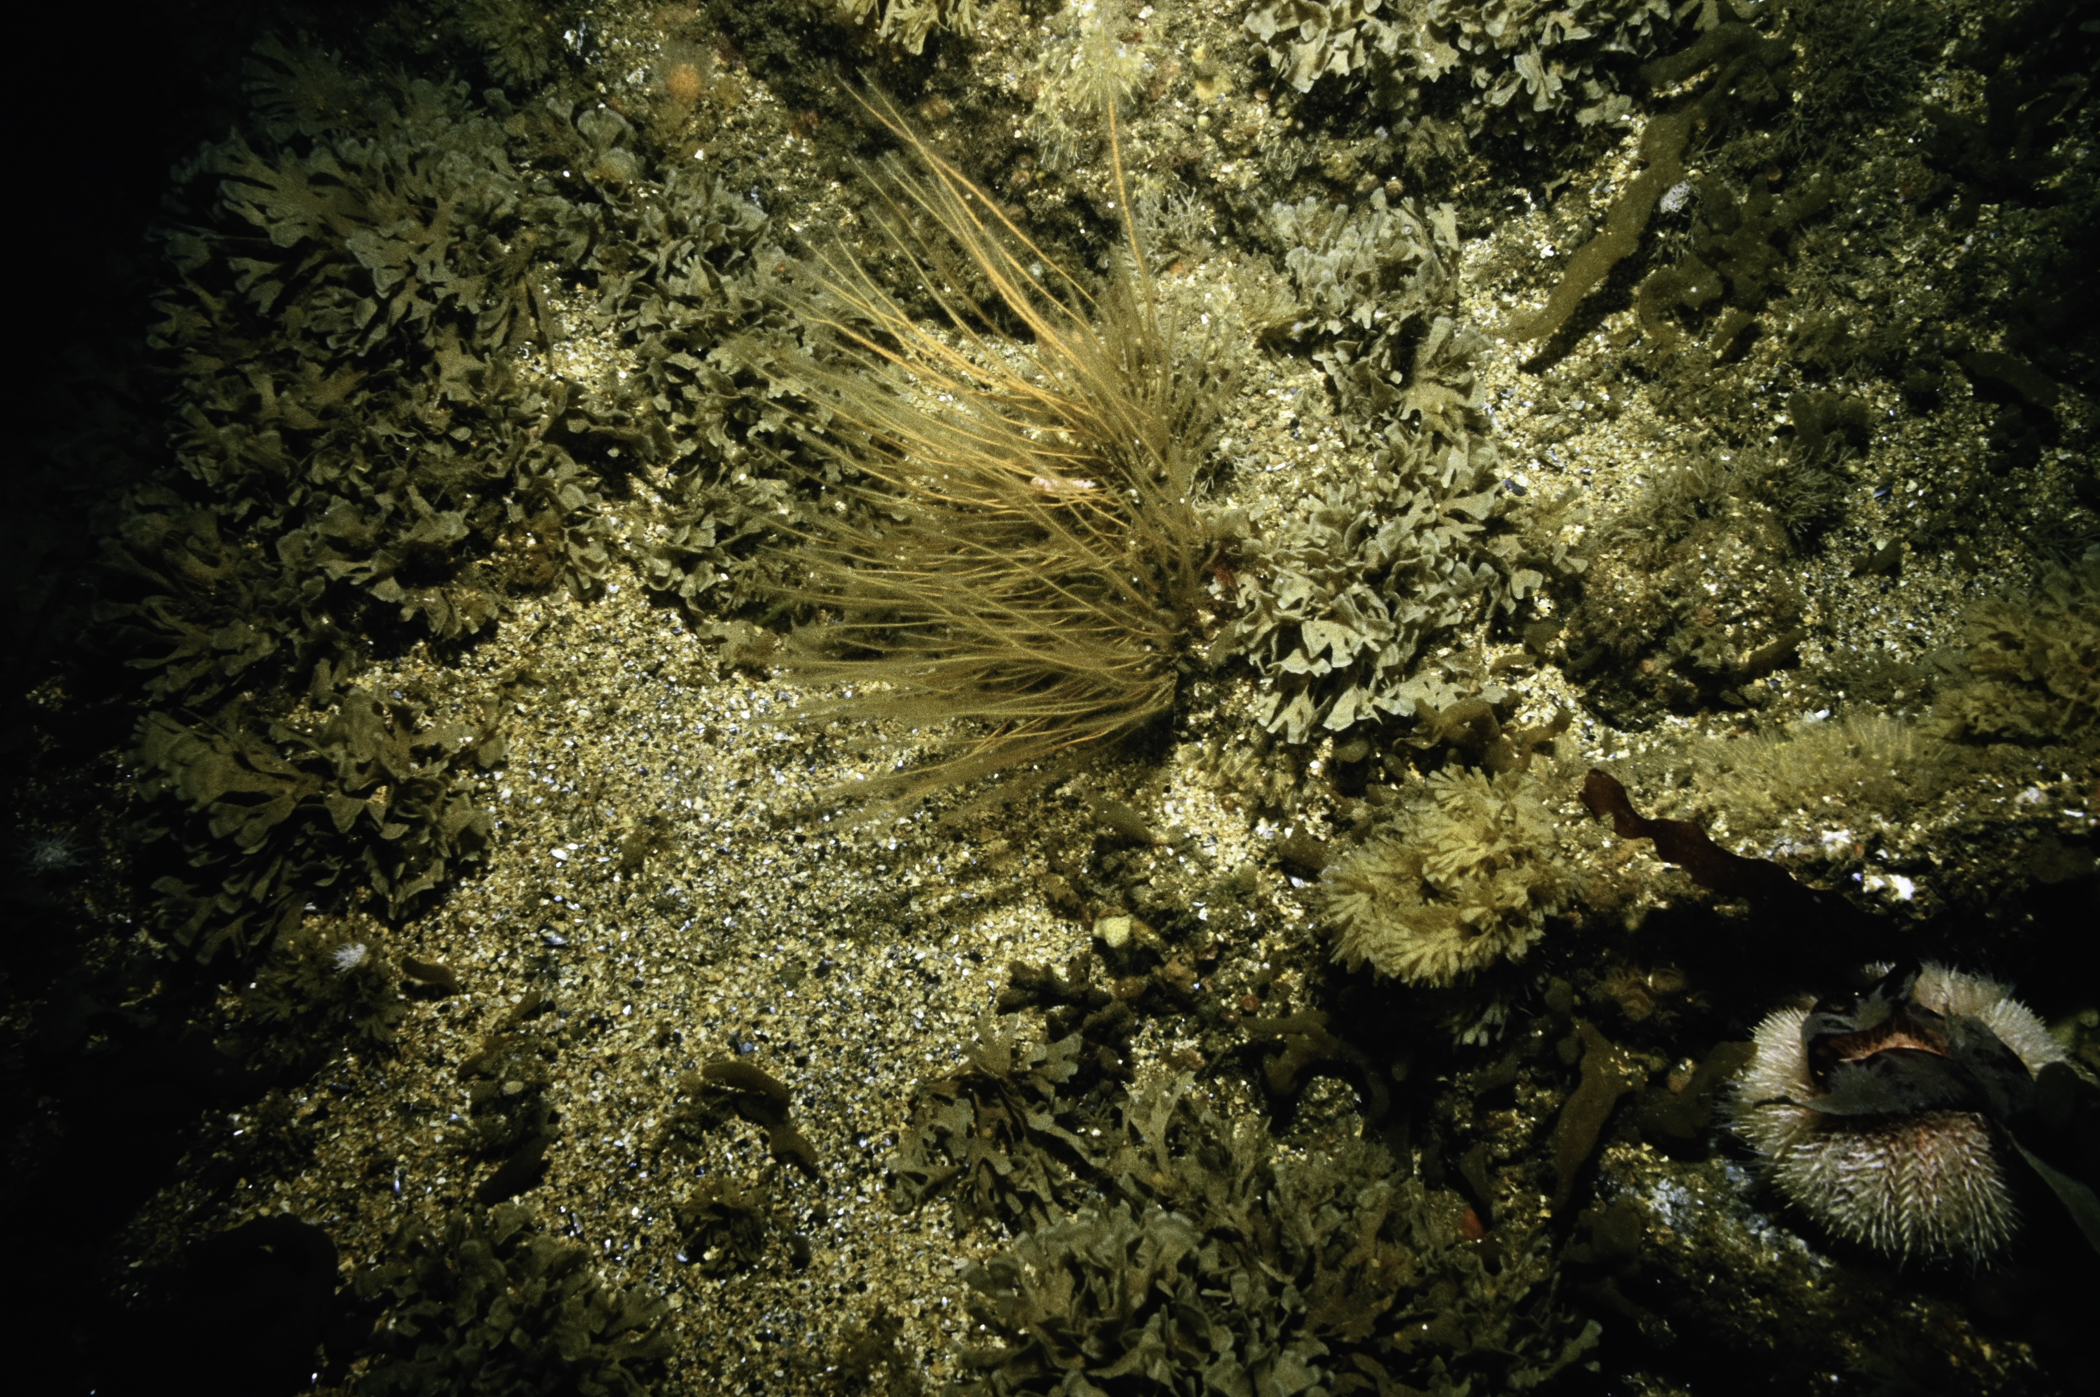 Nemertesia antennina, Flustra foliacea, Securiflustra securifrons. Site: NW Otter Rocks, Skerries, Portrush. 